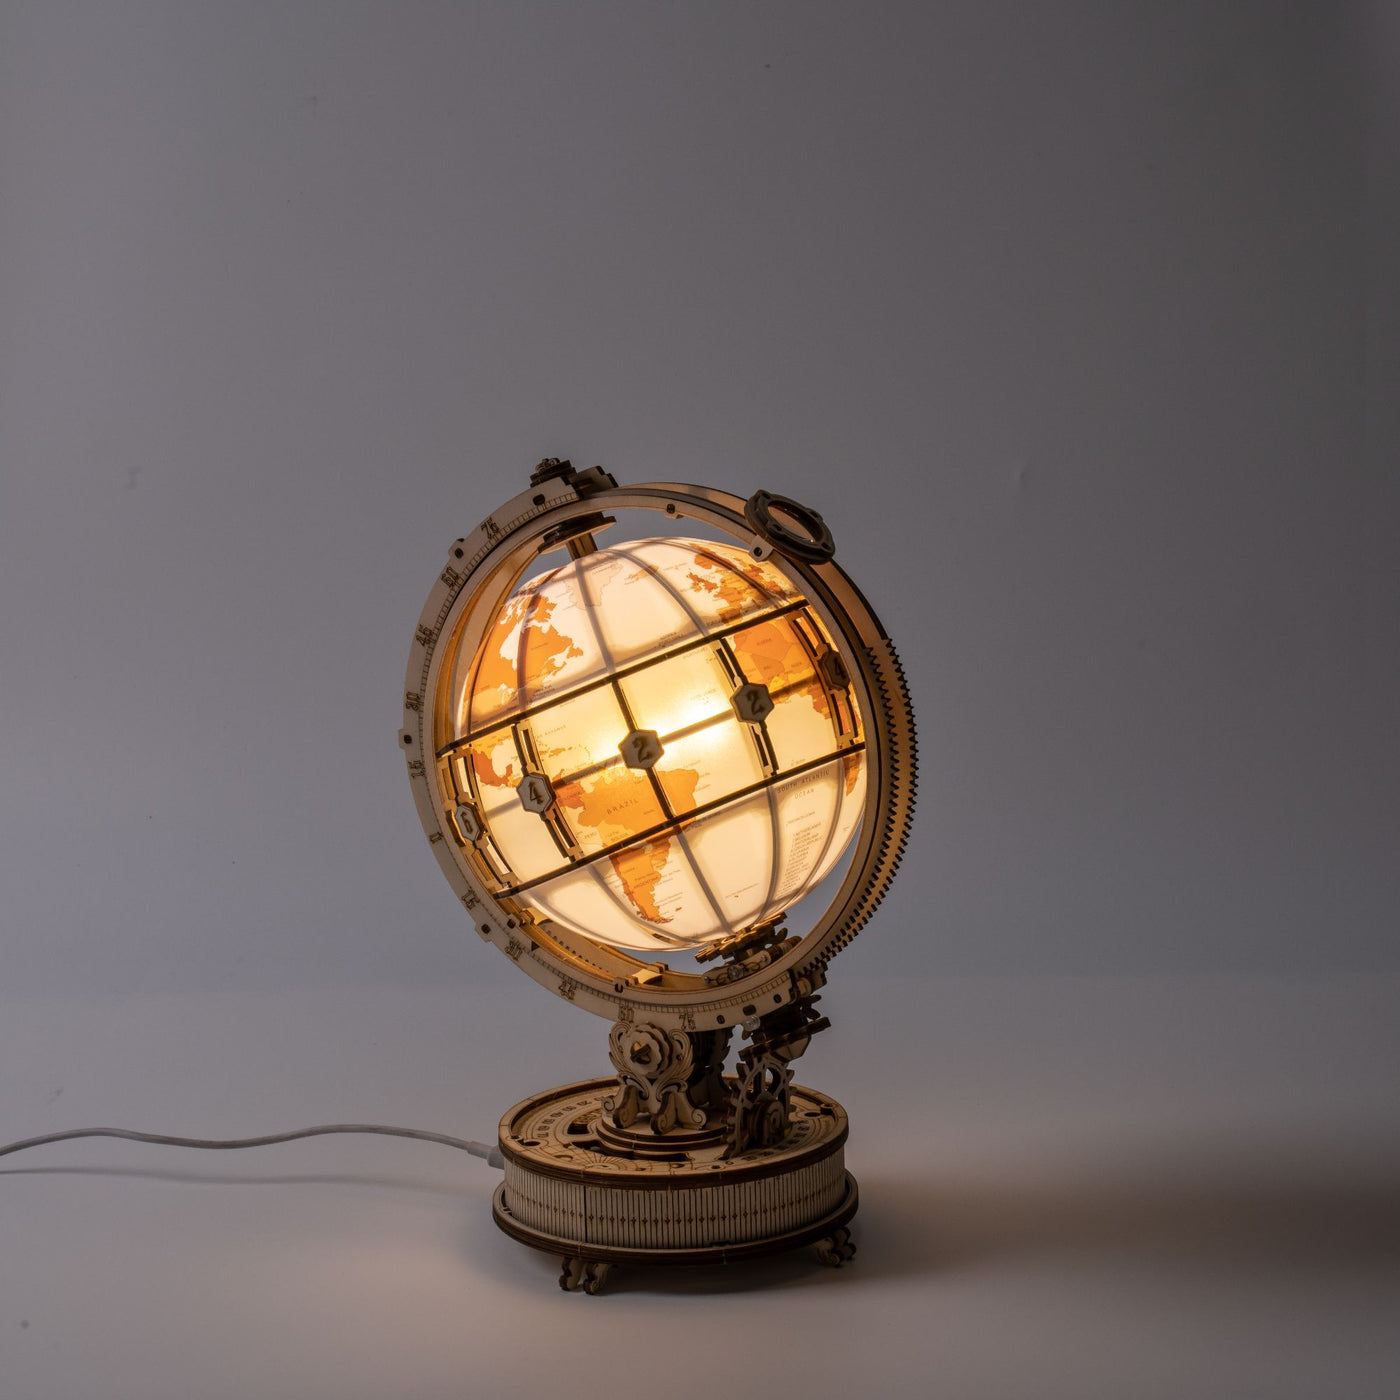 3D-Holzpuzzle mit leuchtendem Globus